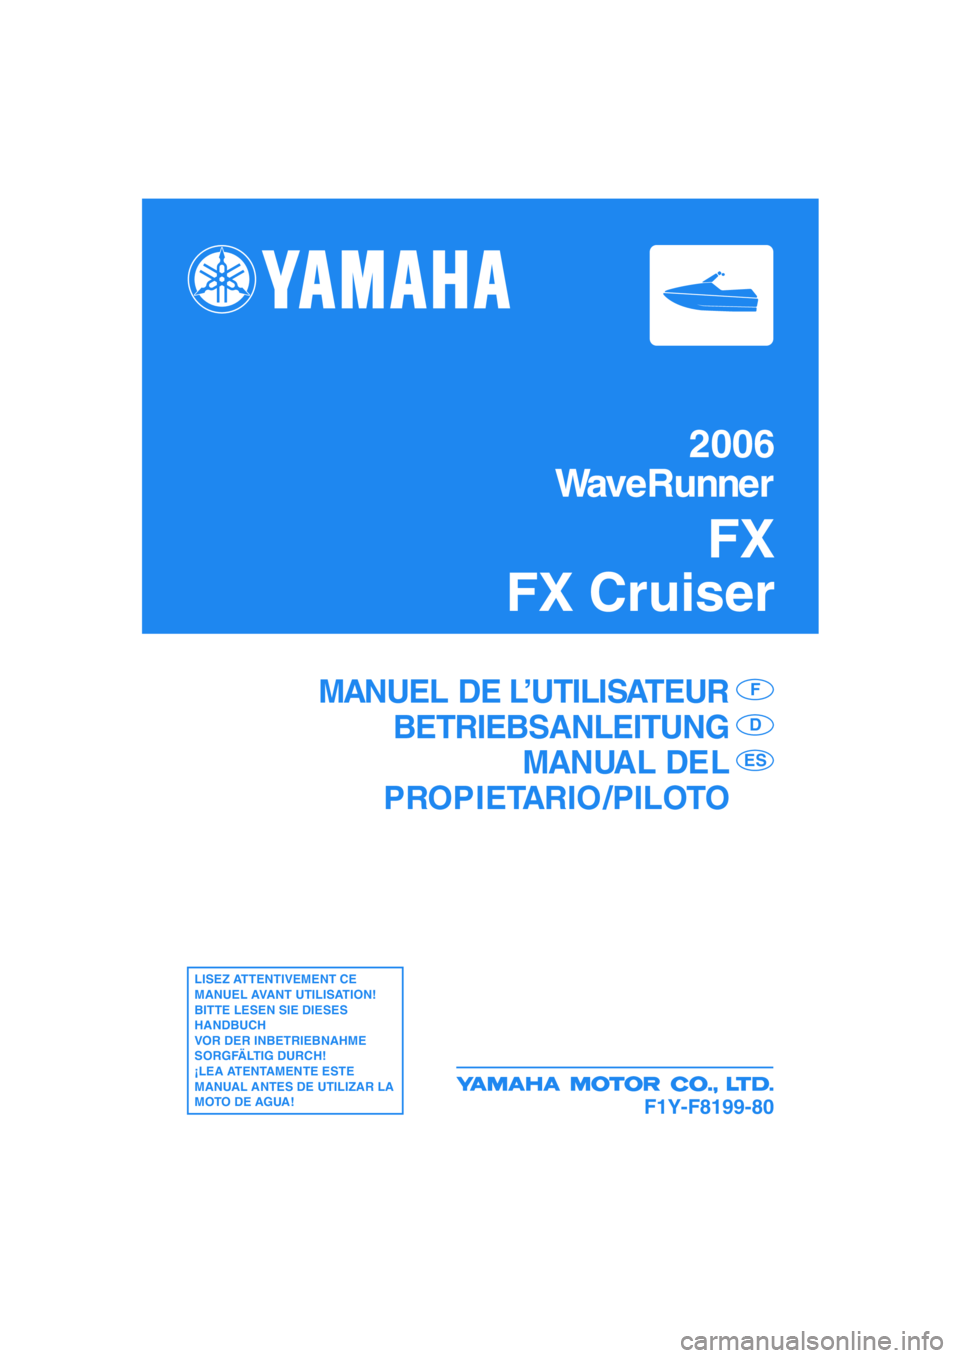 YAMAHA FX CRUISER 2006  Manuale de Empleo (in Spanish) 2006
WaveRunner
FX
FX Cruiser
F1Y-F8199-80
MANUEL DE L’UTILISATEUR
BETRIEBSANLEITUNG
MANUAL DEL
PROPIETARIO /PILOTOF
D
ES
LISEZ ATTENTIVEMENT CE 
MANUEL AVANT UTILISATION!
BITTE LESEN SIE DIESES 
HA